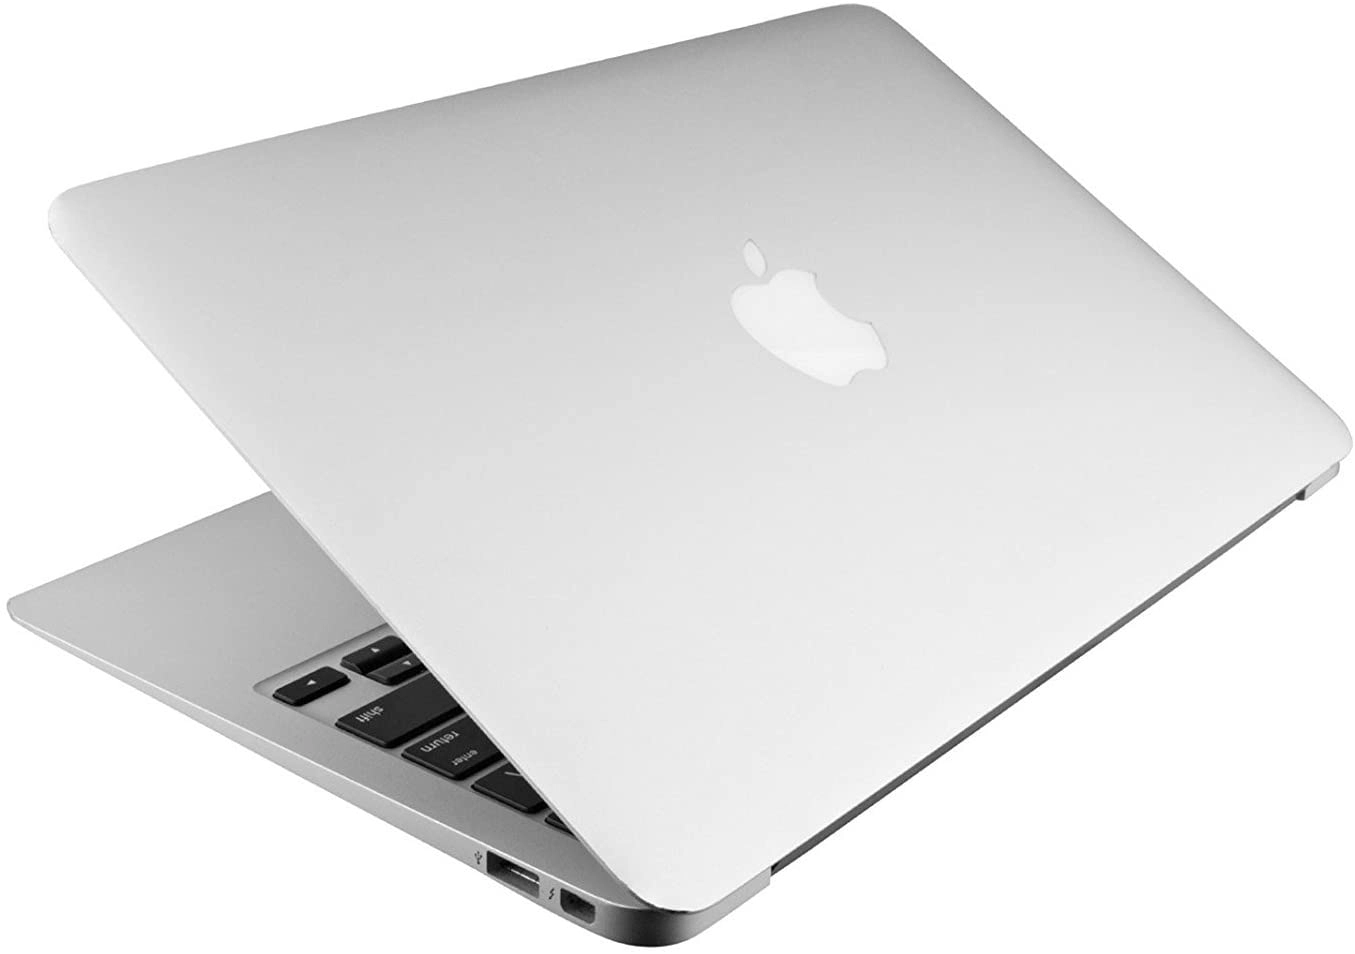 Apple MJVM2LLA3RF laptop image